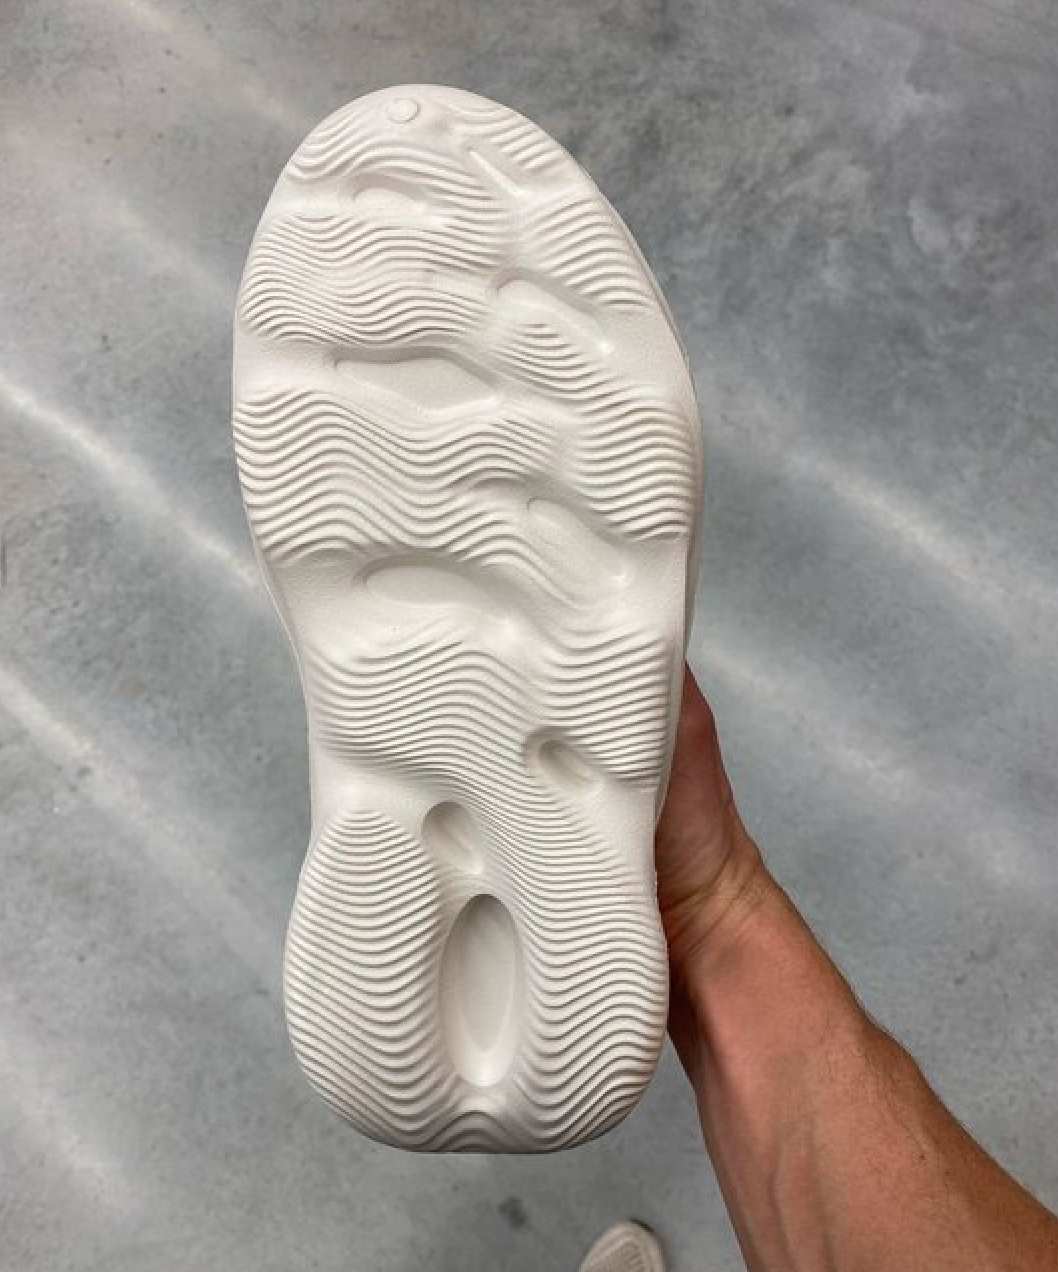 adidas Yeezy Foam Runner Croc